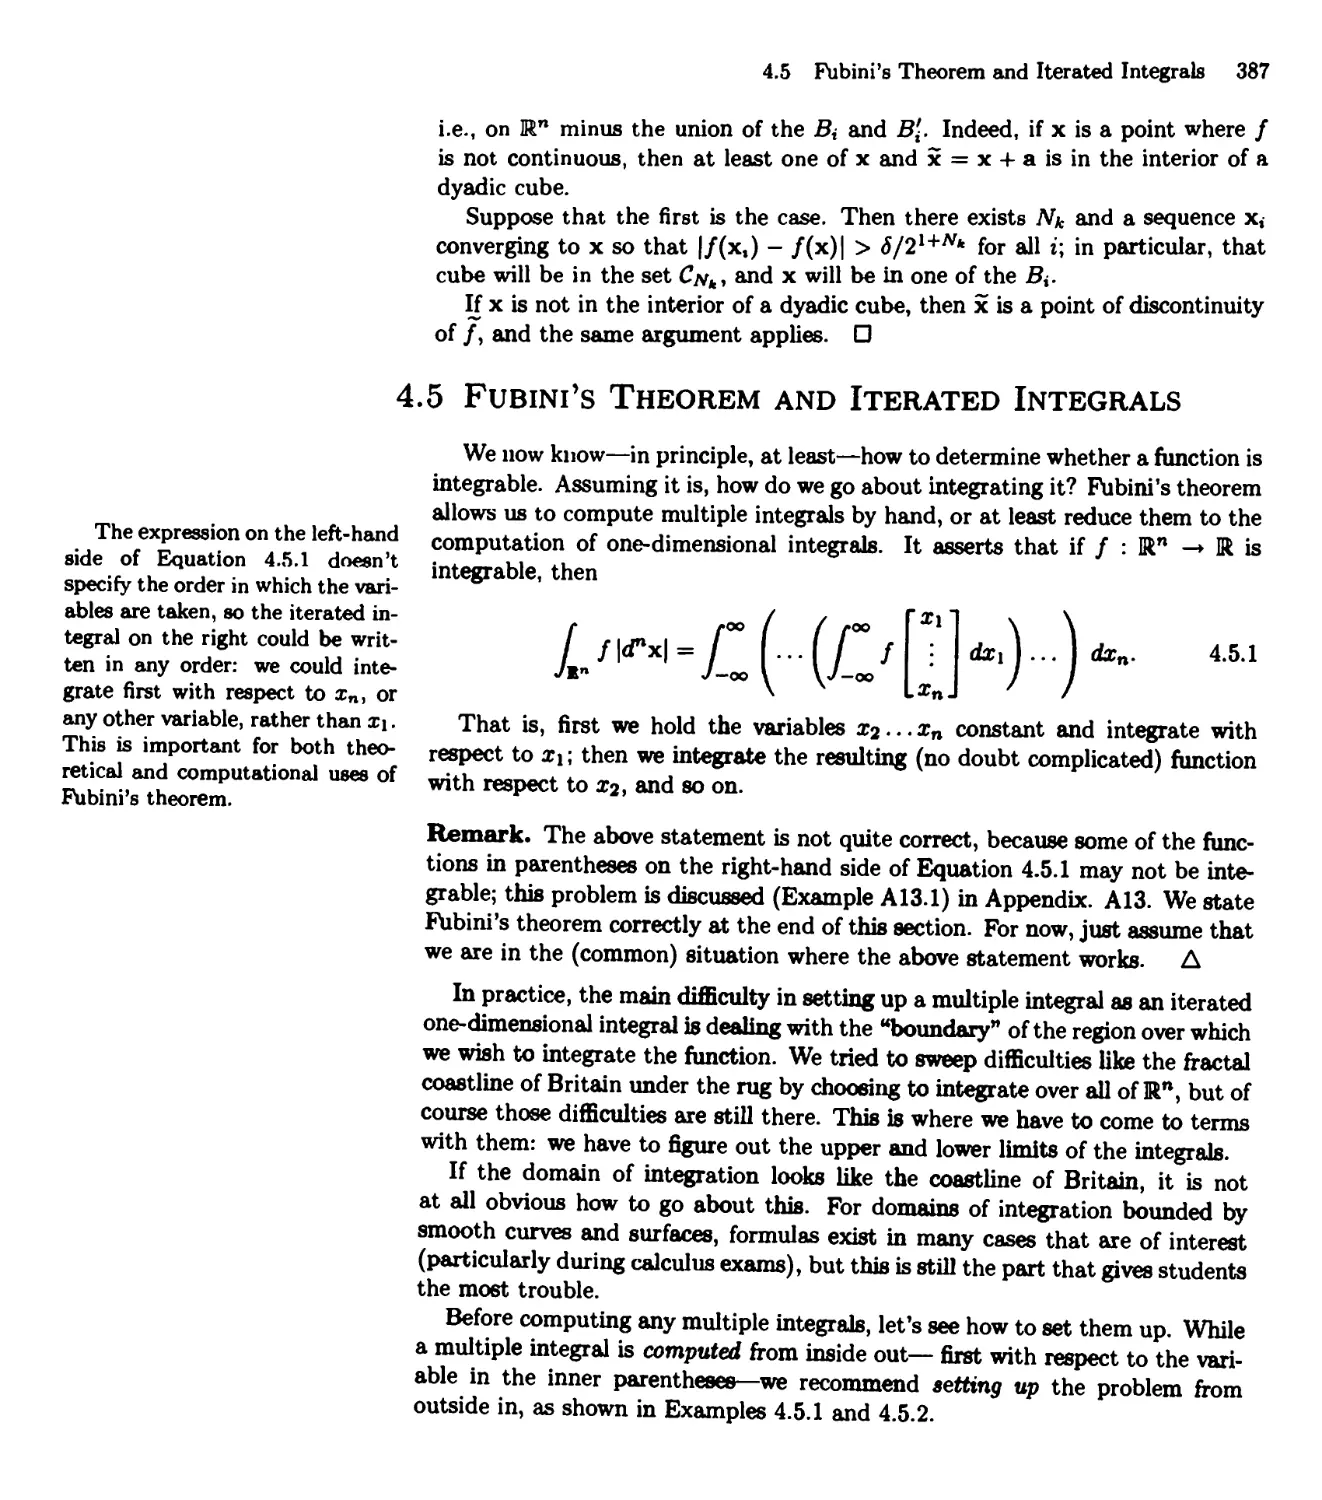 4.5 Fubini's Theorem and Iterated Integrals